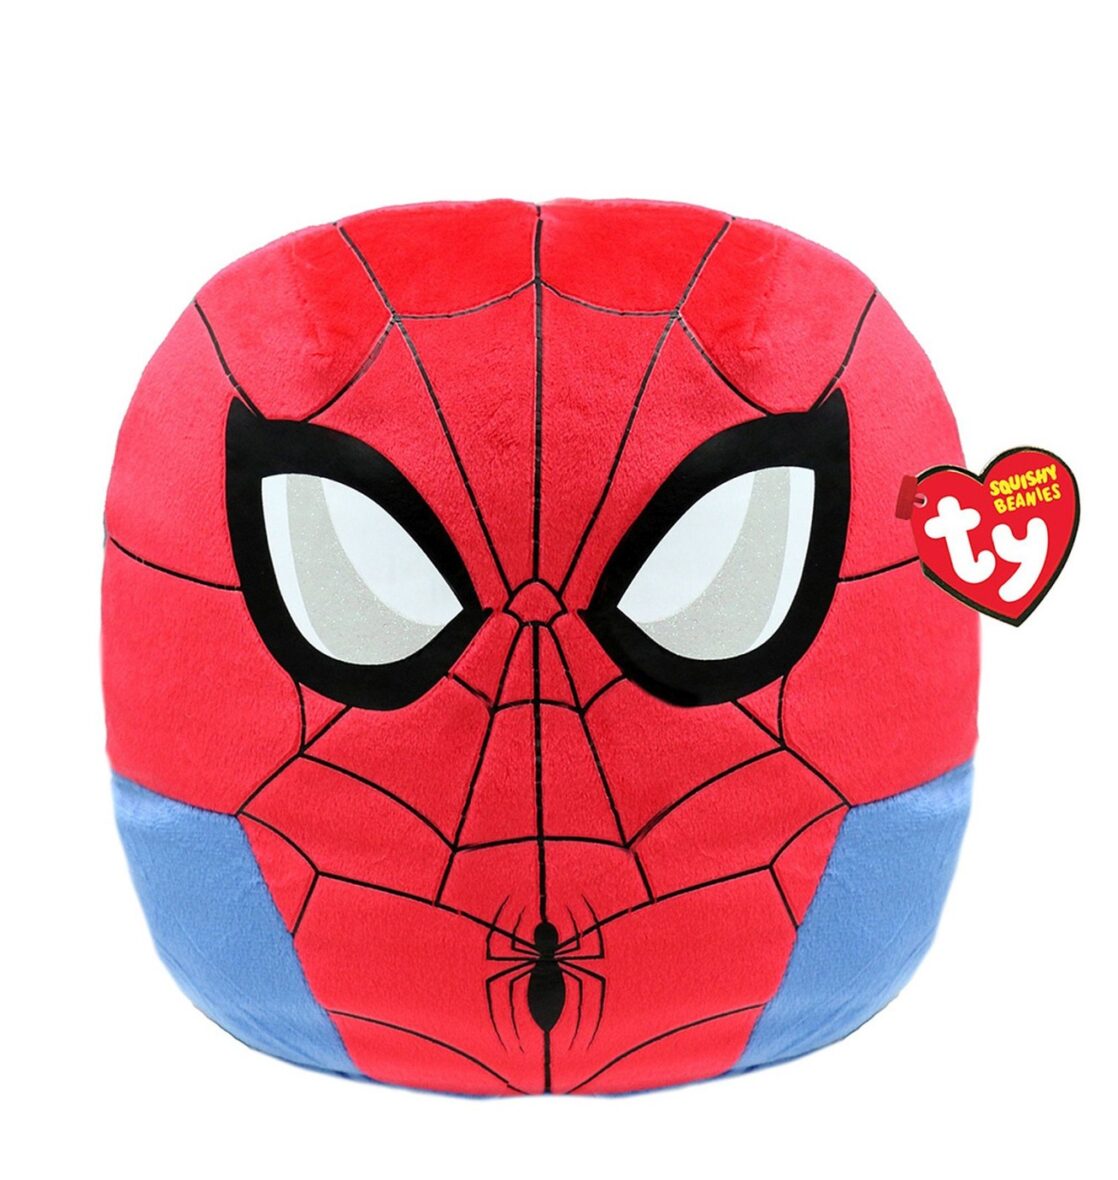 Plus Ty 30cm Squishy Beanies Marvel Spiderman